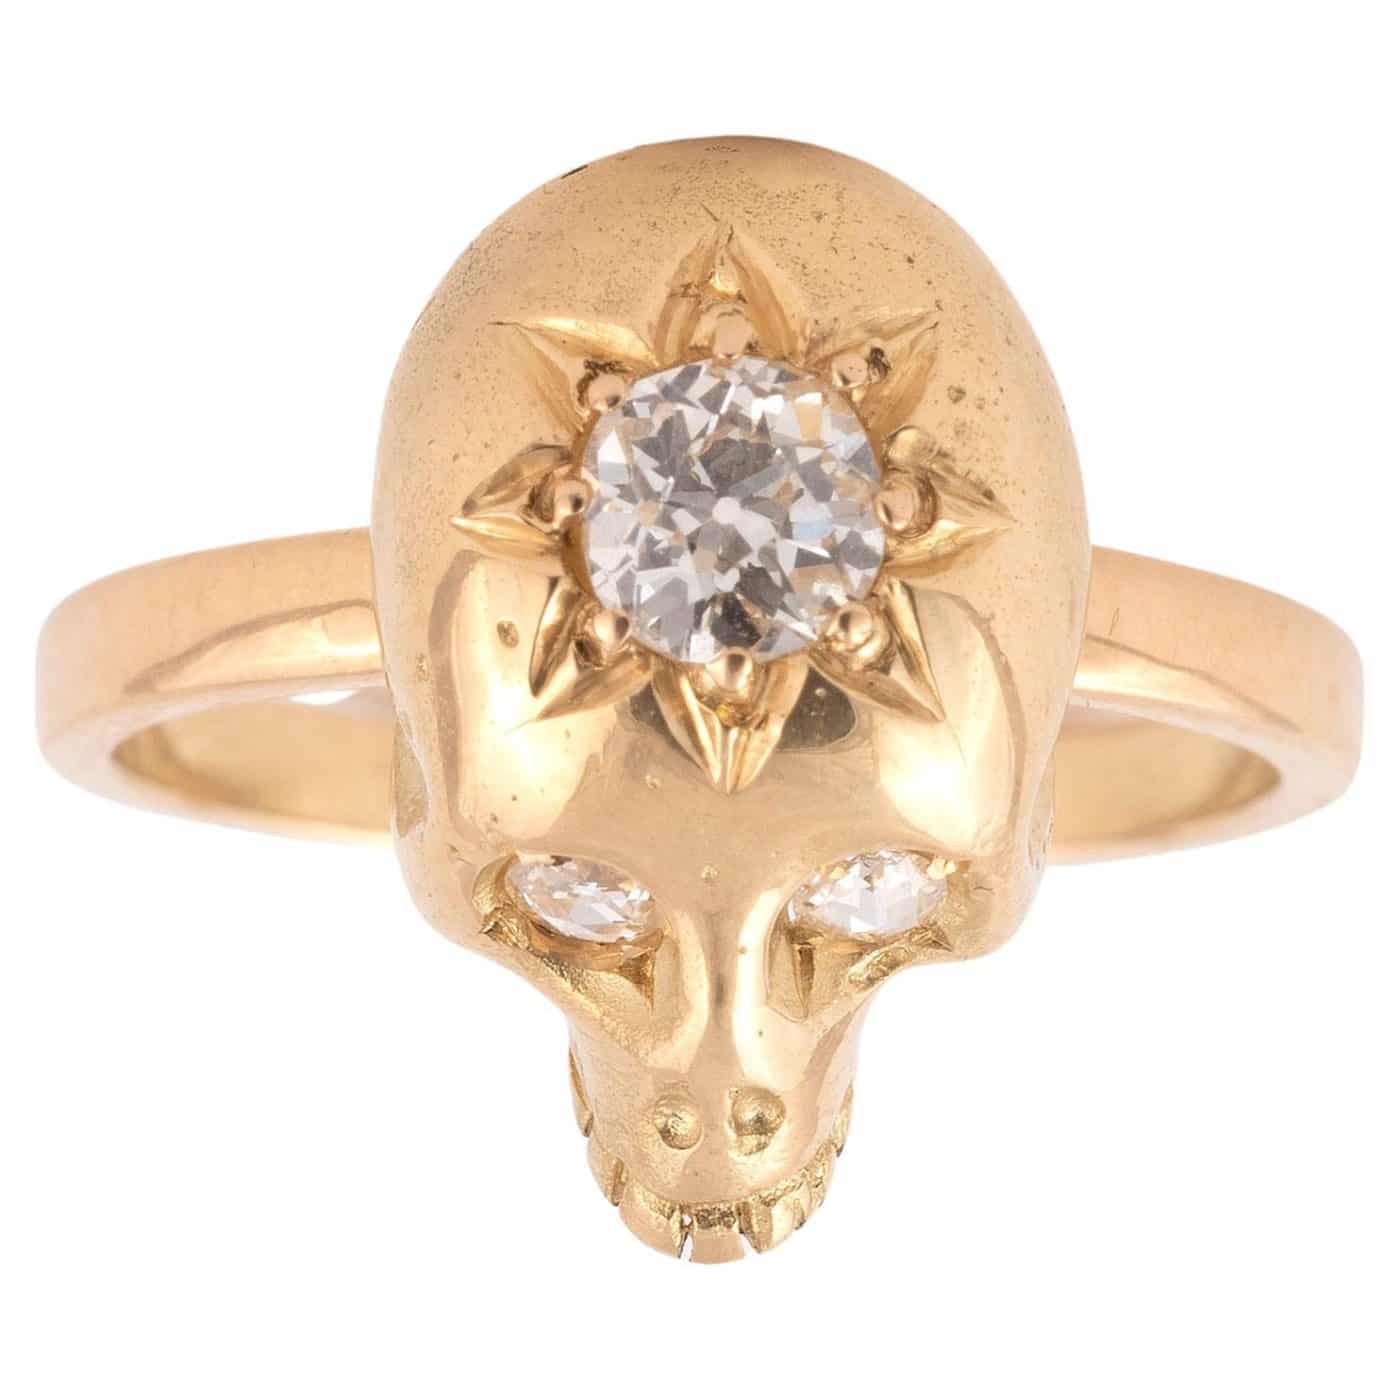 Skull ring in yellow gold and diamonds, 21st century